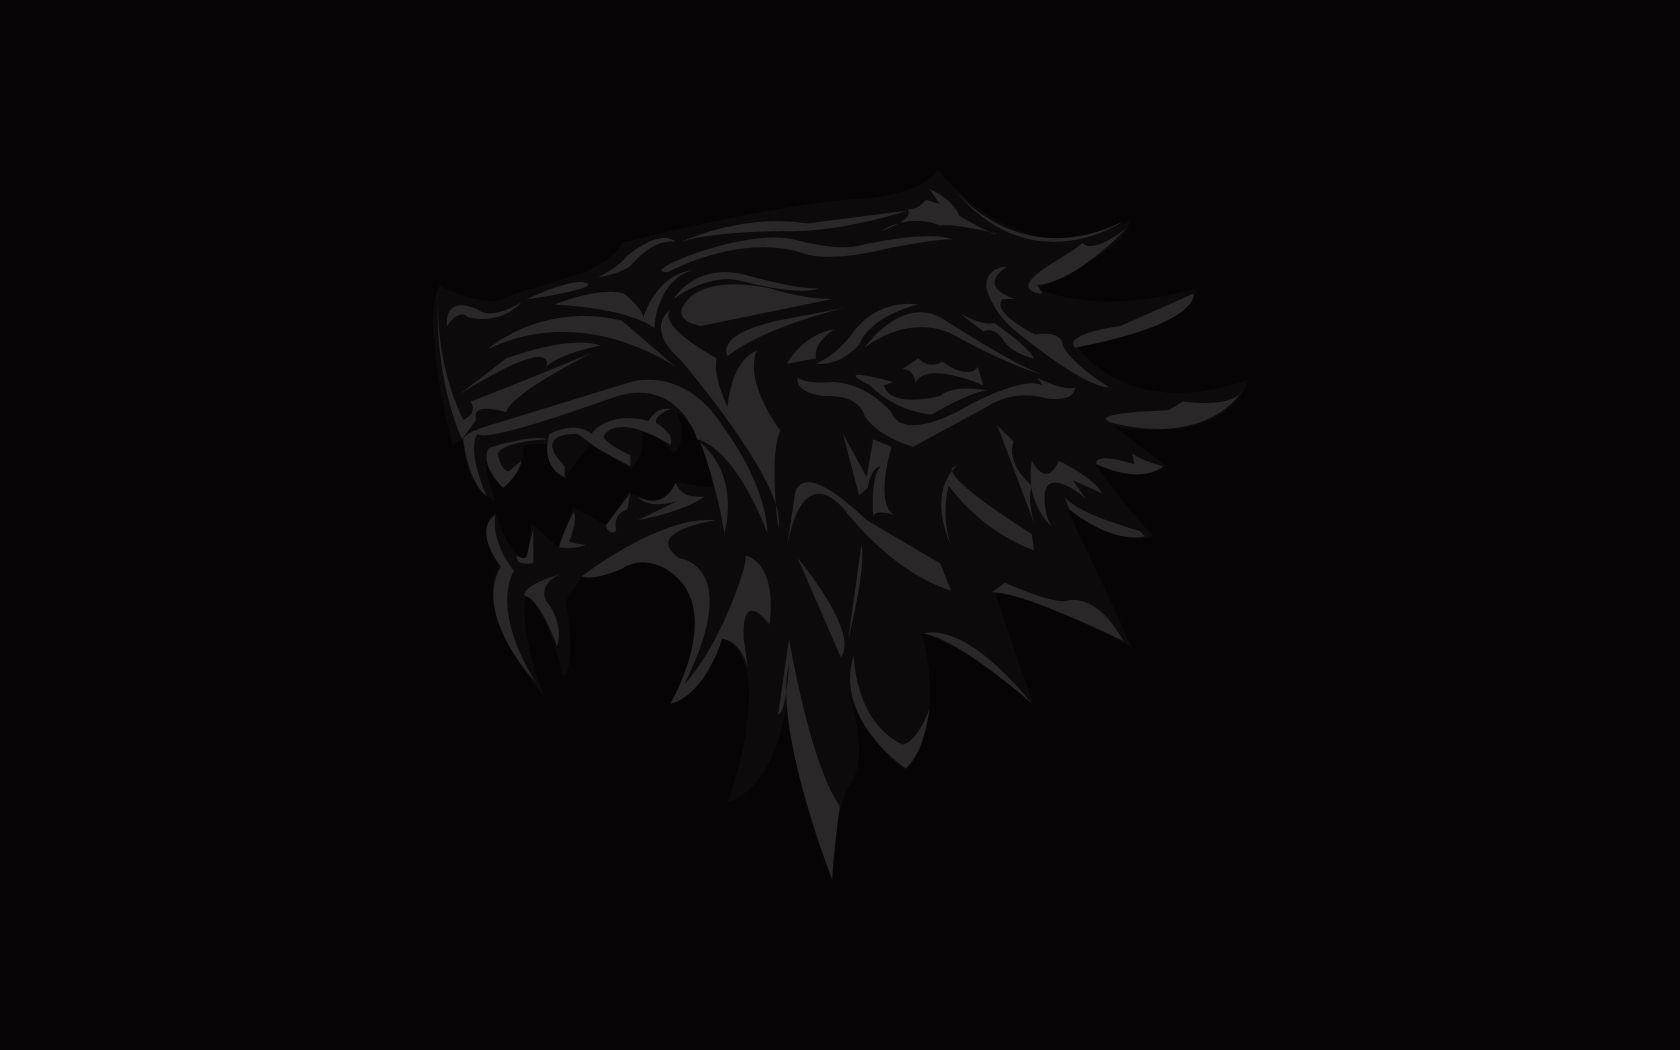 Game of Thrones Game of Thrones- Stark direwolf wallpaper